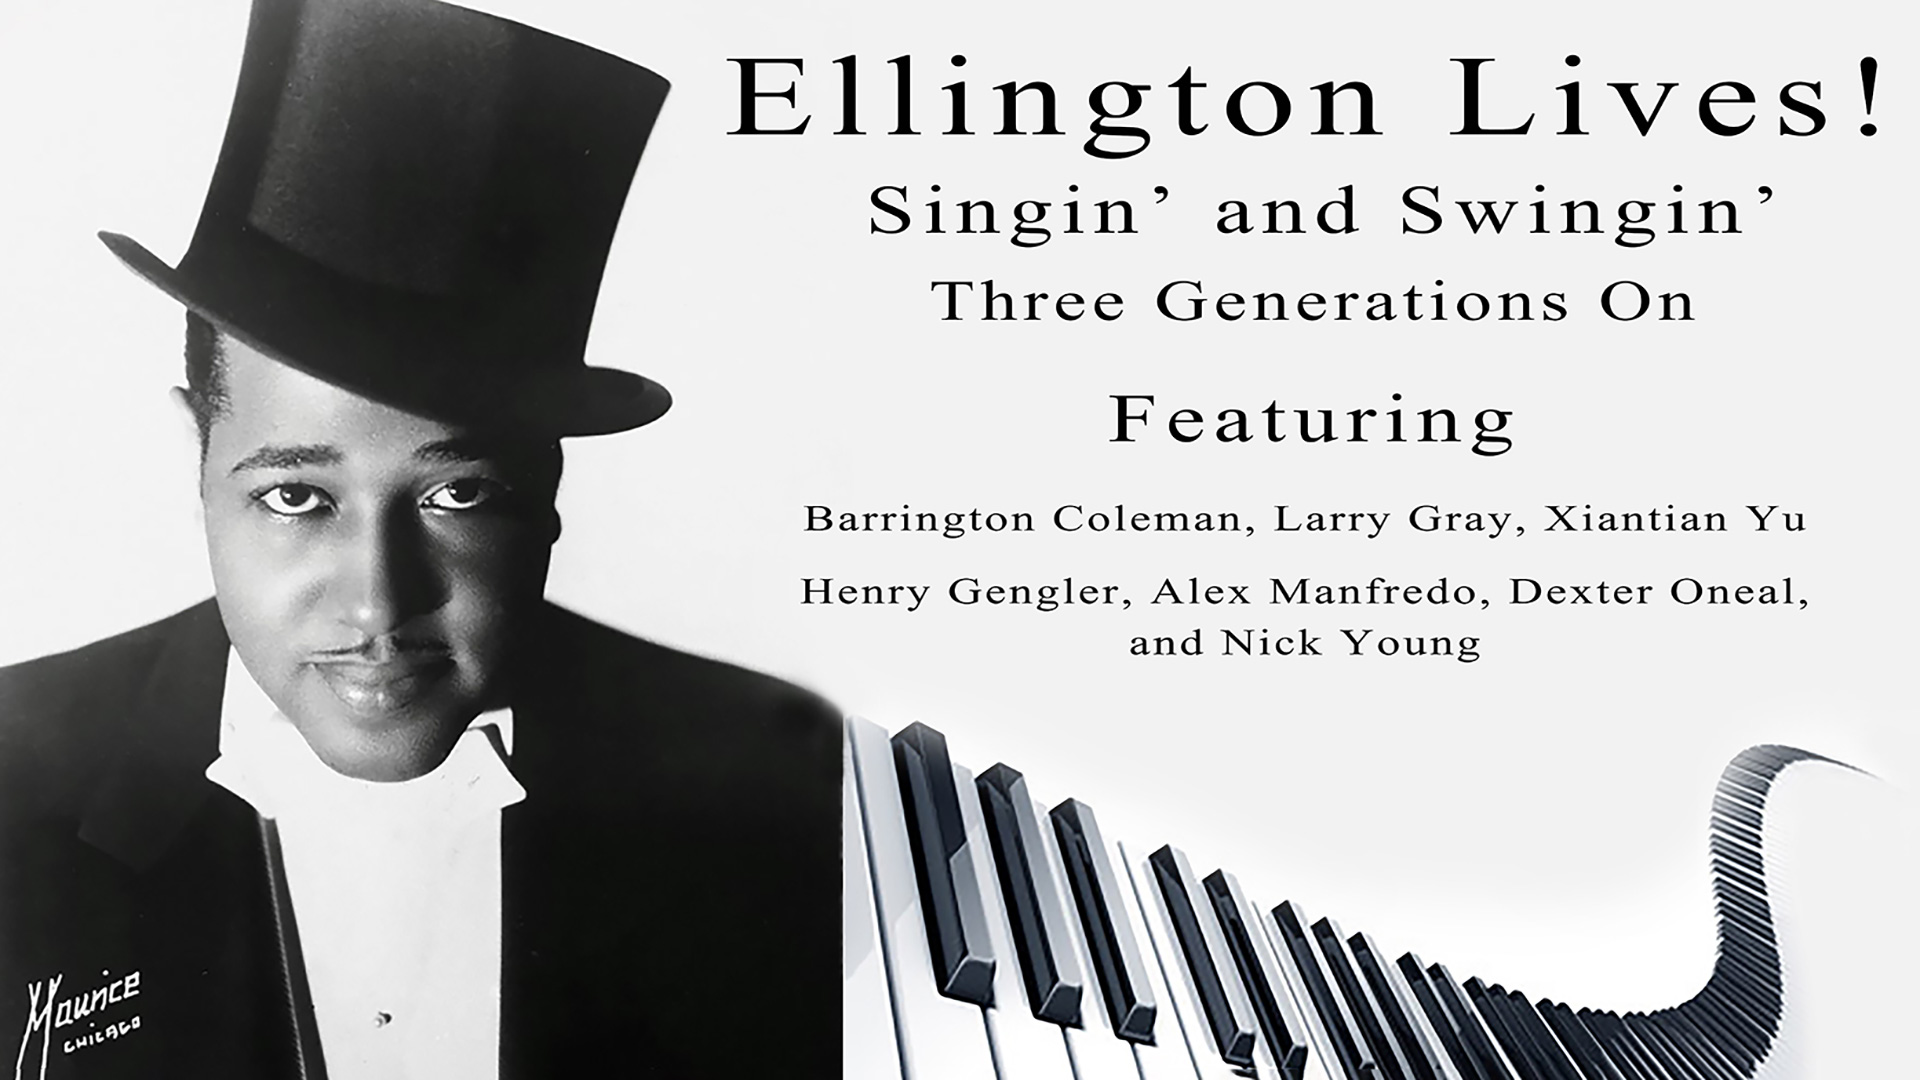 black and white image of Duke Ellington and keyboard keys with the title Ellington Lives! Singin' and Swingin' Three Generations On